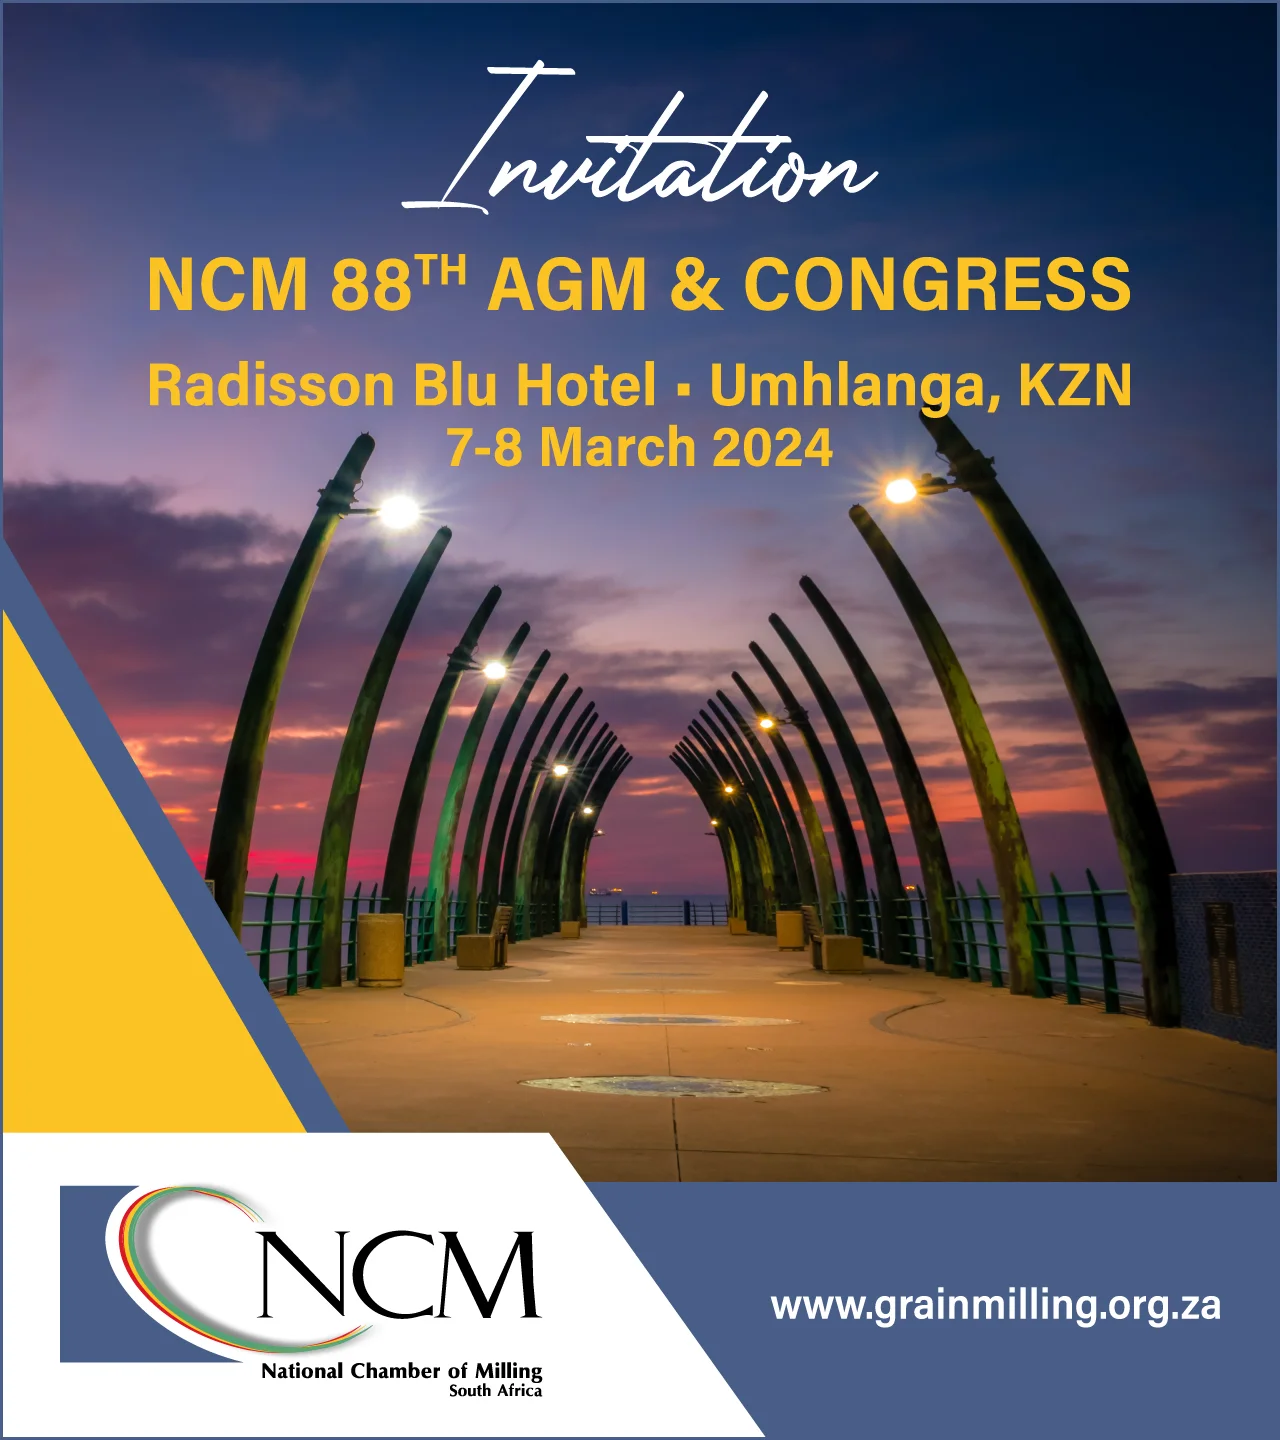 NCM 88th AGM & Congress | Invitation | 7-8 March 2024 | Radisson Blu Hotel, Umhlanga, KwaZulu-Natal